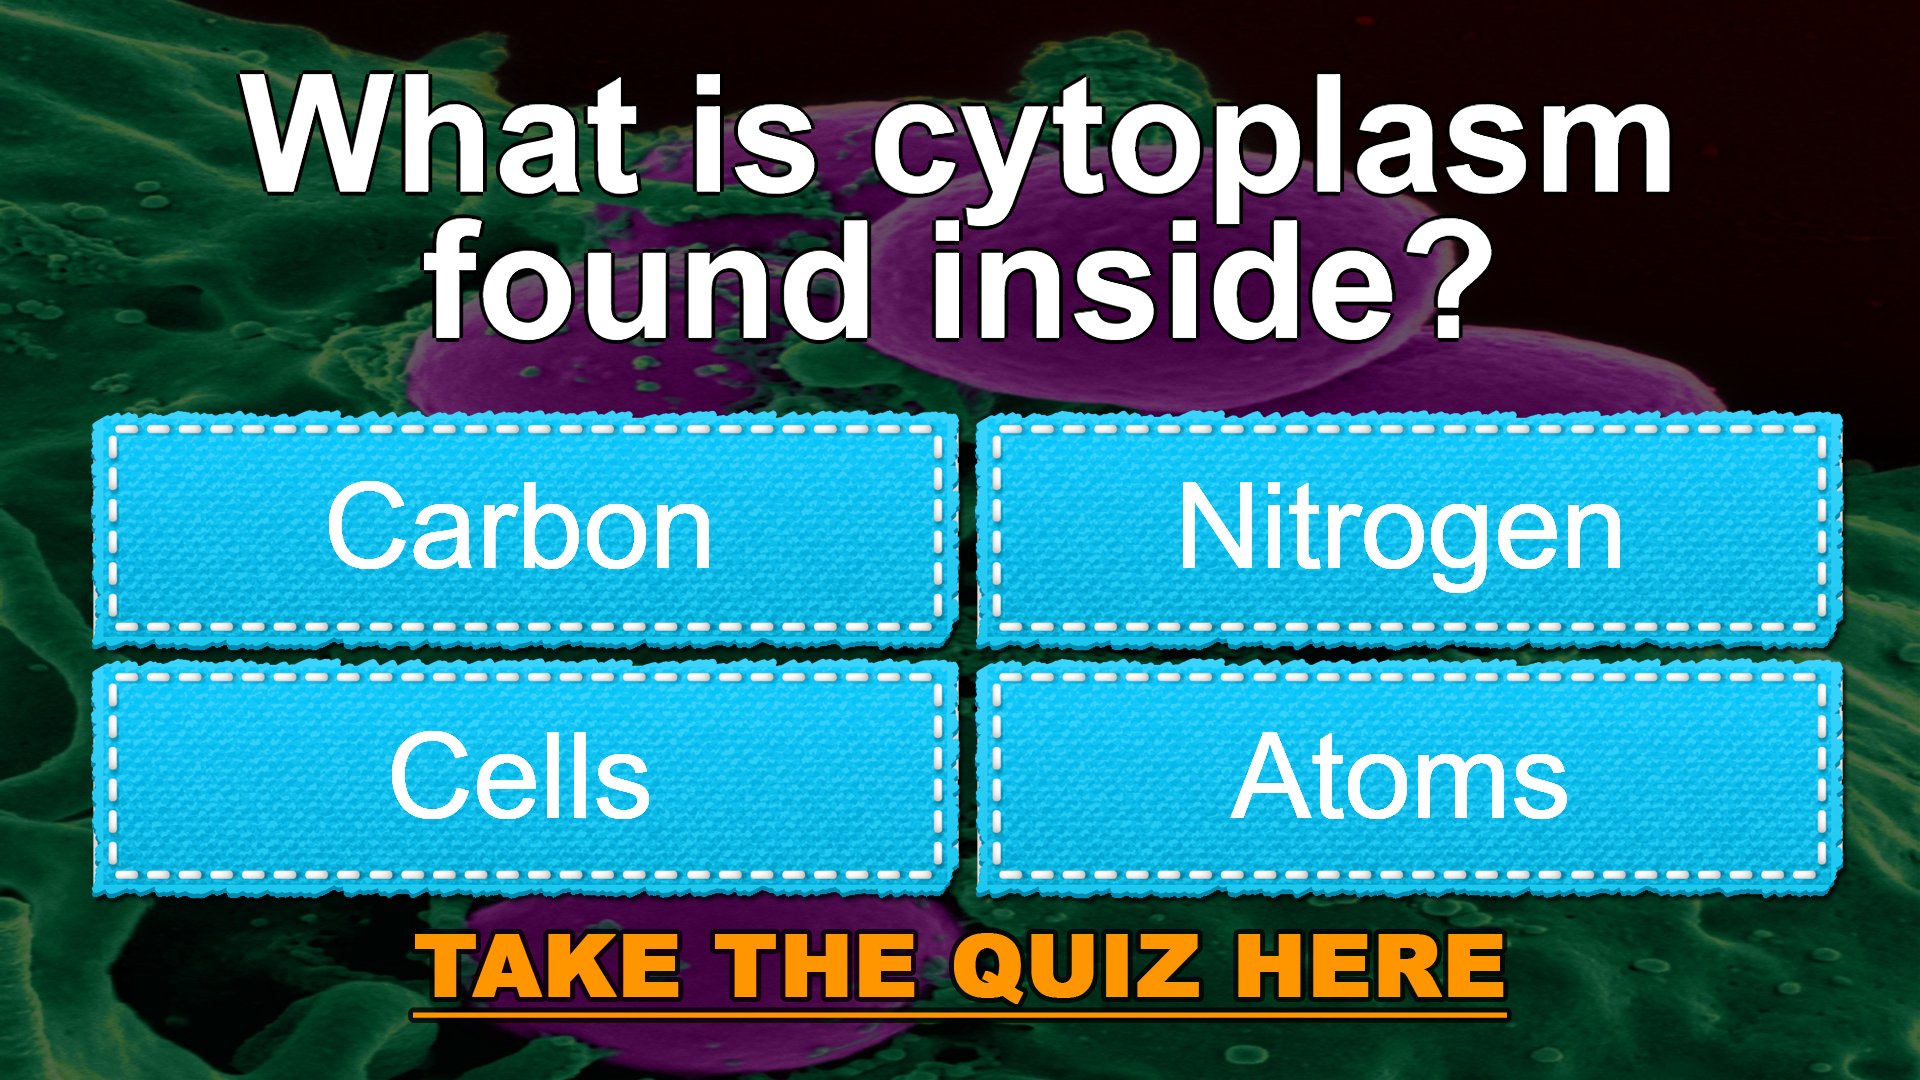 What is cytoplasm found inside?